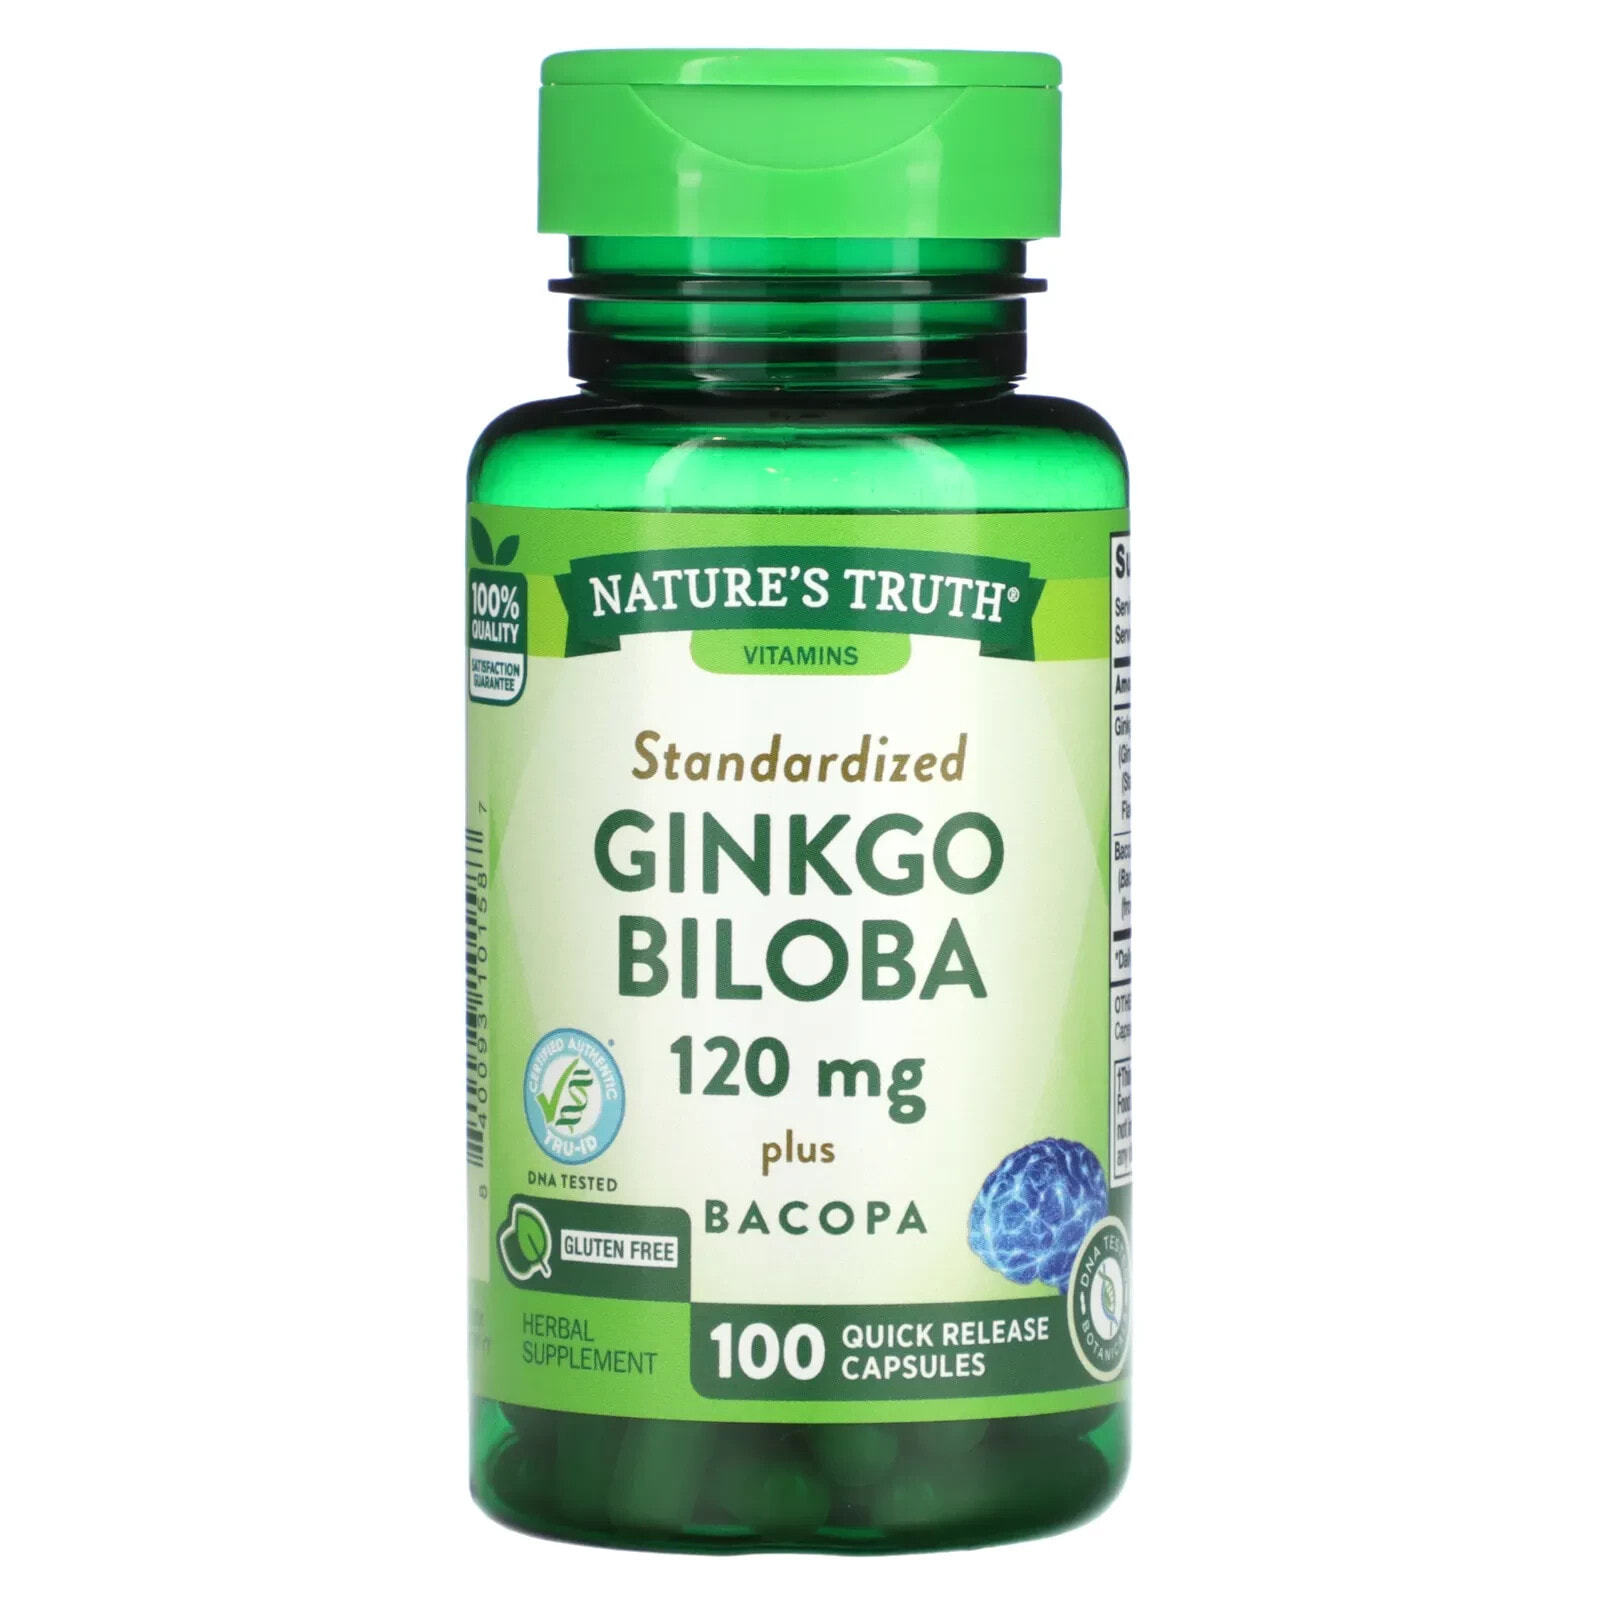 Ginkgo Biloba Plus Bacopa, 120 mg, 100 Quick Release Capsules